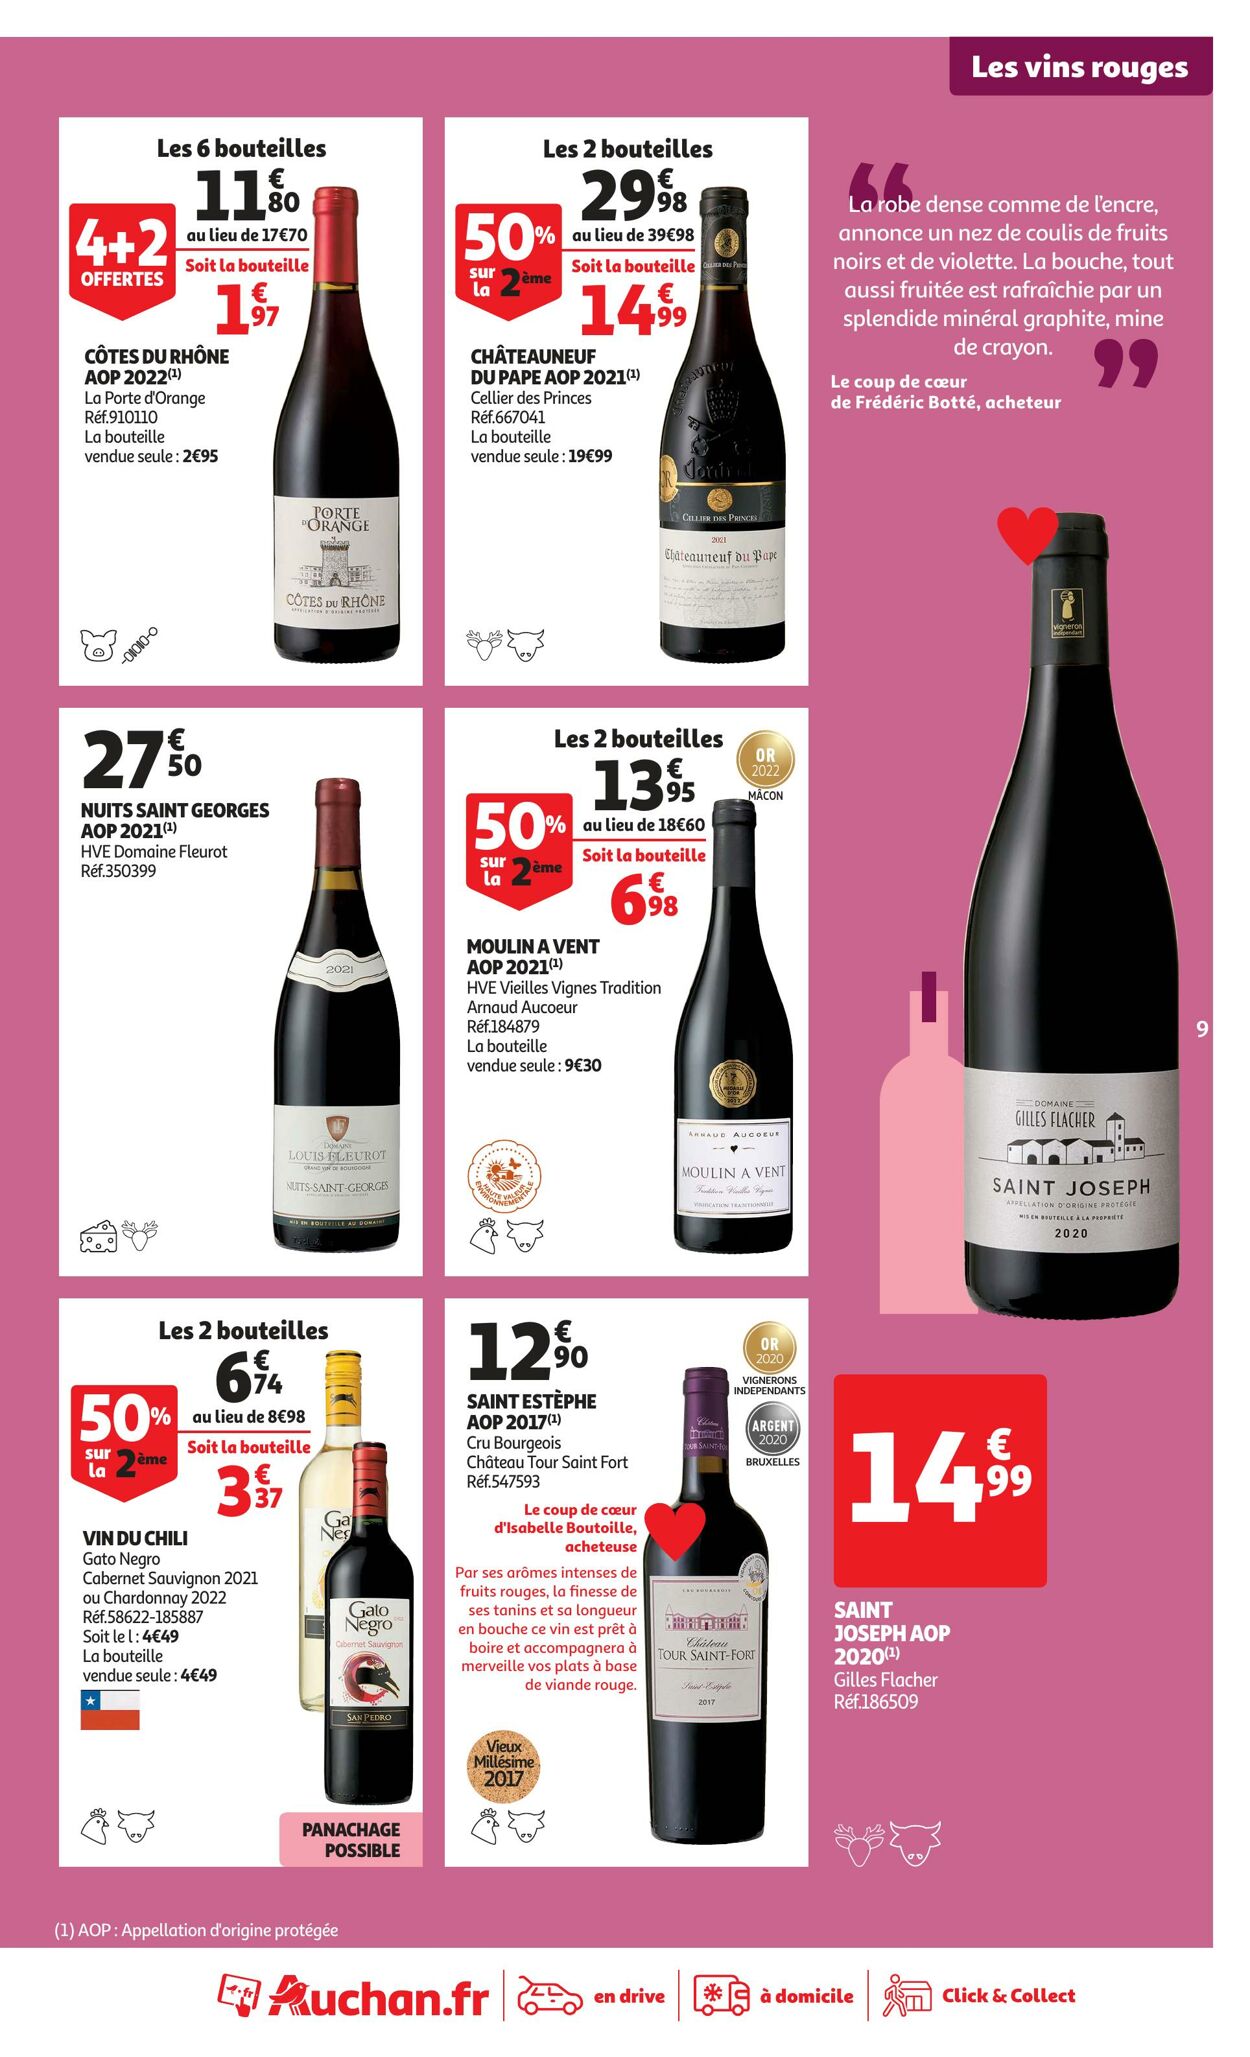 Catalogue Auchan 07.03.2023 - 21.03.2023